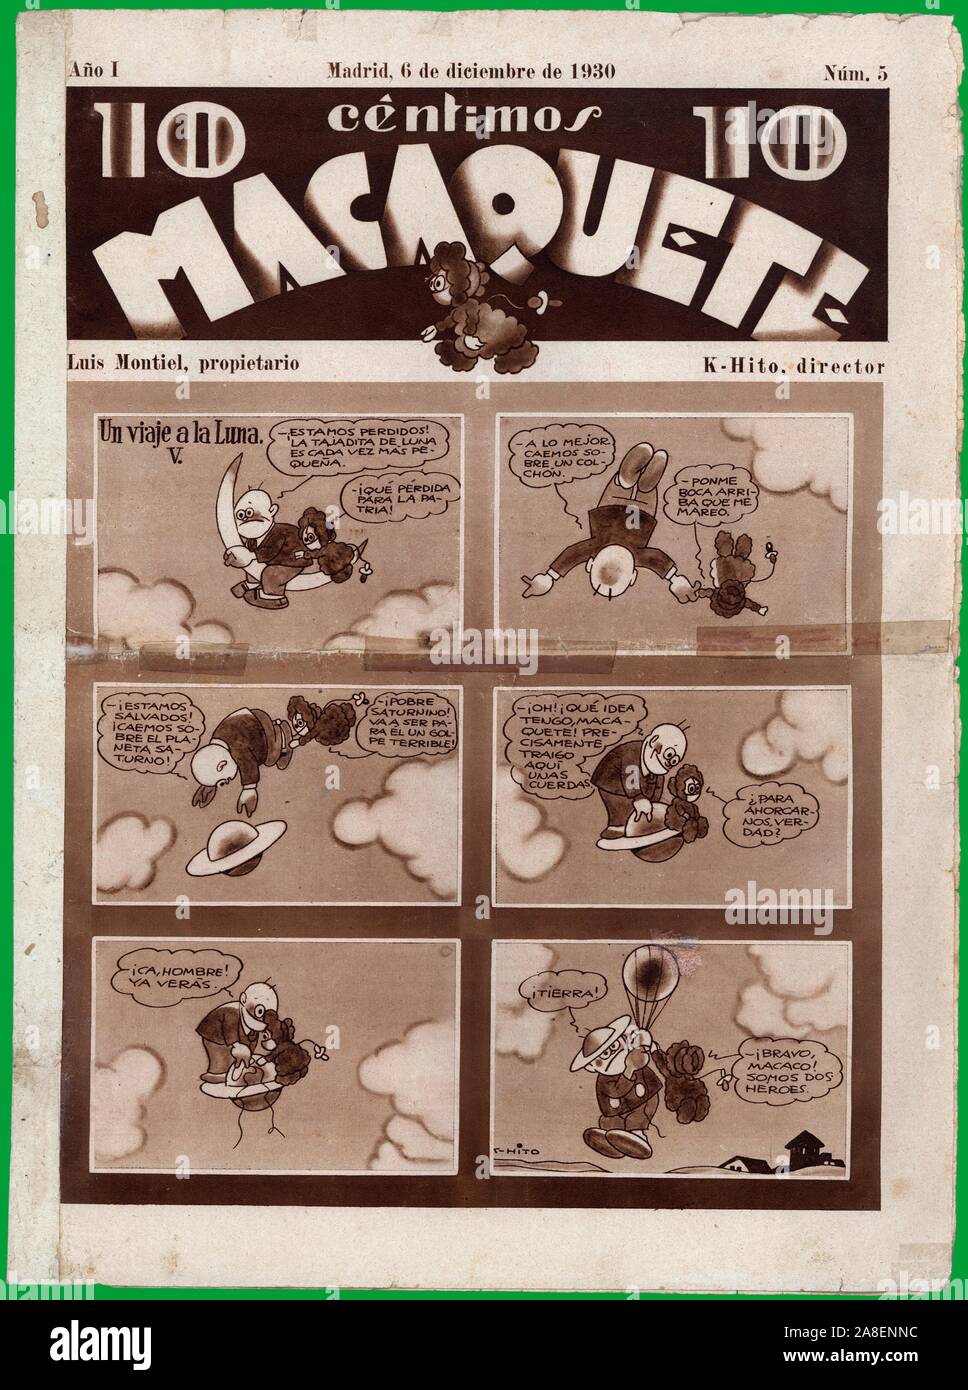 Portada de la revista infantil Macaquete, editada en Madrid, diciembre de 1930. Author: K-HITO. Ricardo García López. Stock Photo